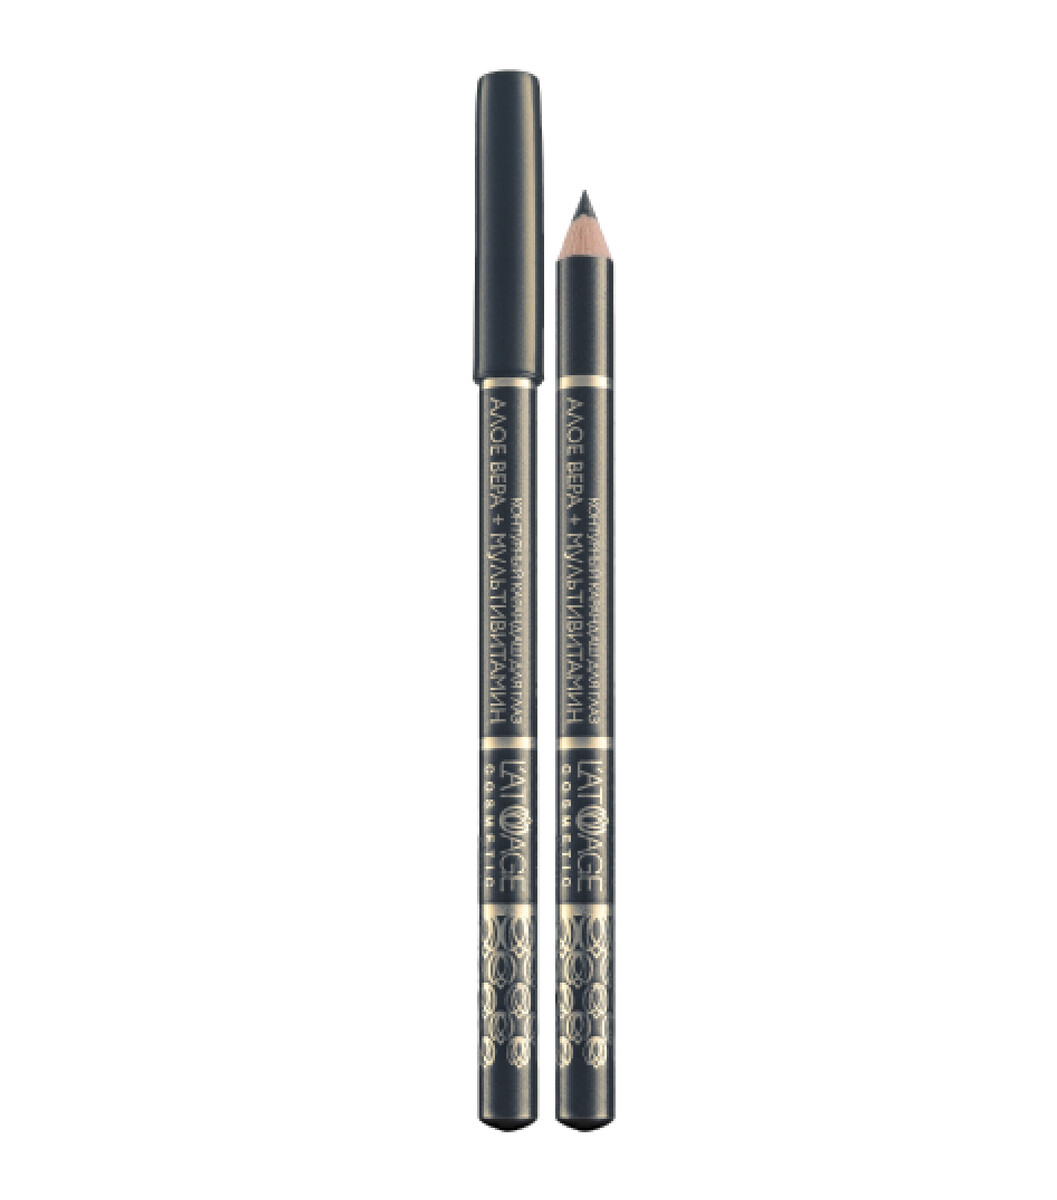 Контурный карандаш для глаз latuage cosmetic №43 (серо-черный) контурный карандаш для бровей latuage cosmetic 04 блонд